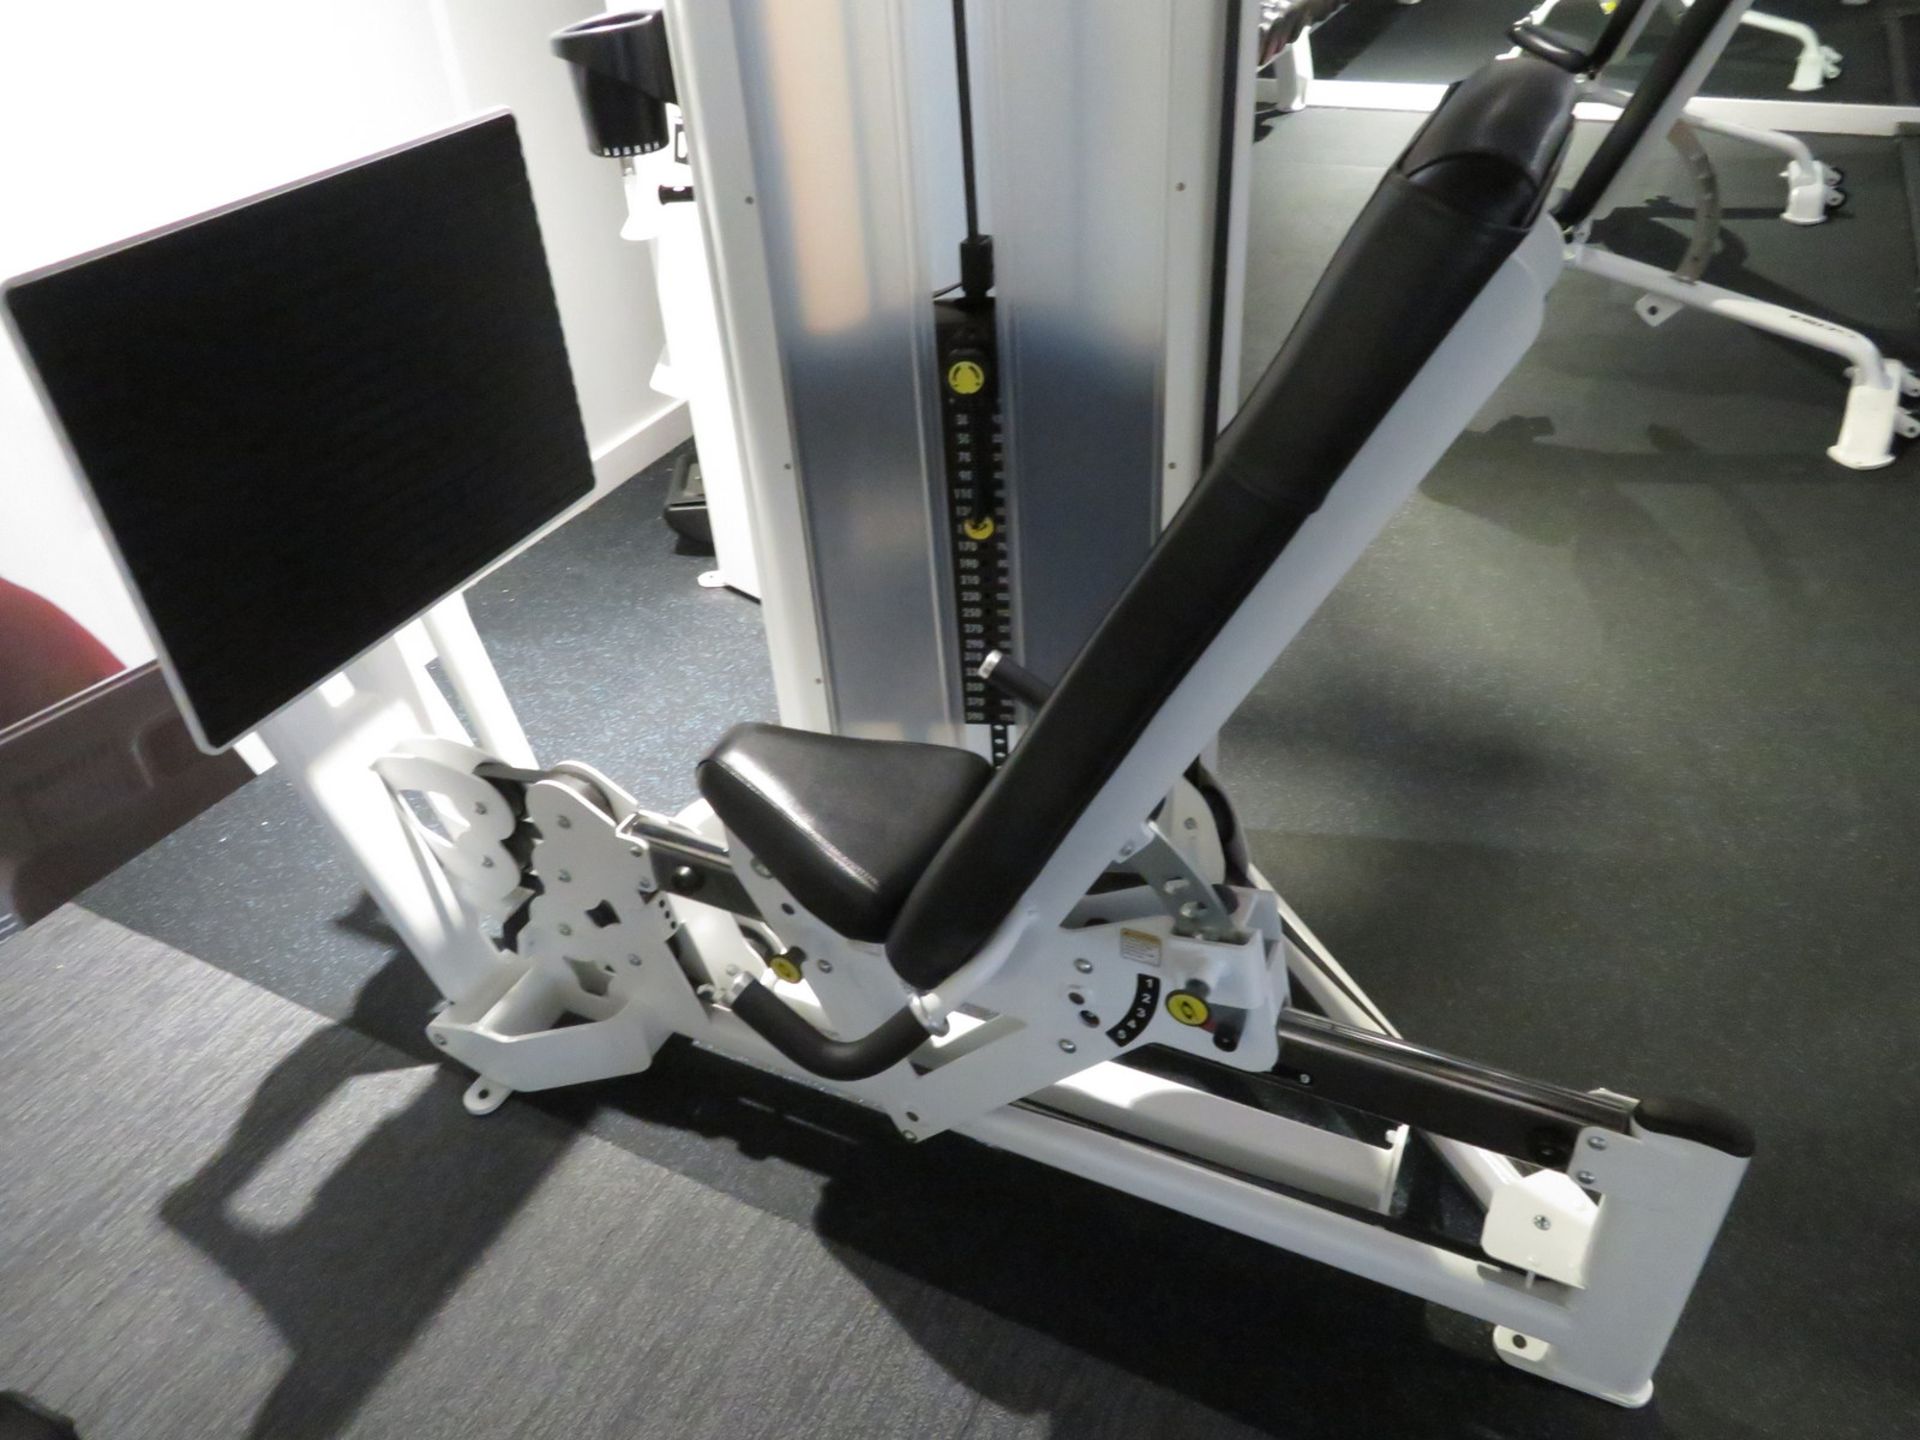 Cybex Leg Press: 12040. 175.5kg Weight Stack. Dimensions: 110x130x160cm (LxDxH) - Image 2 of 8